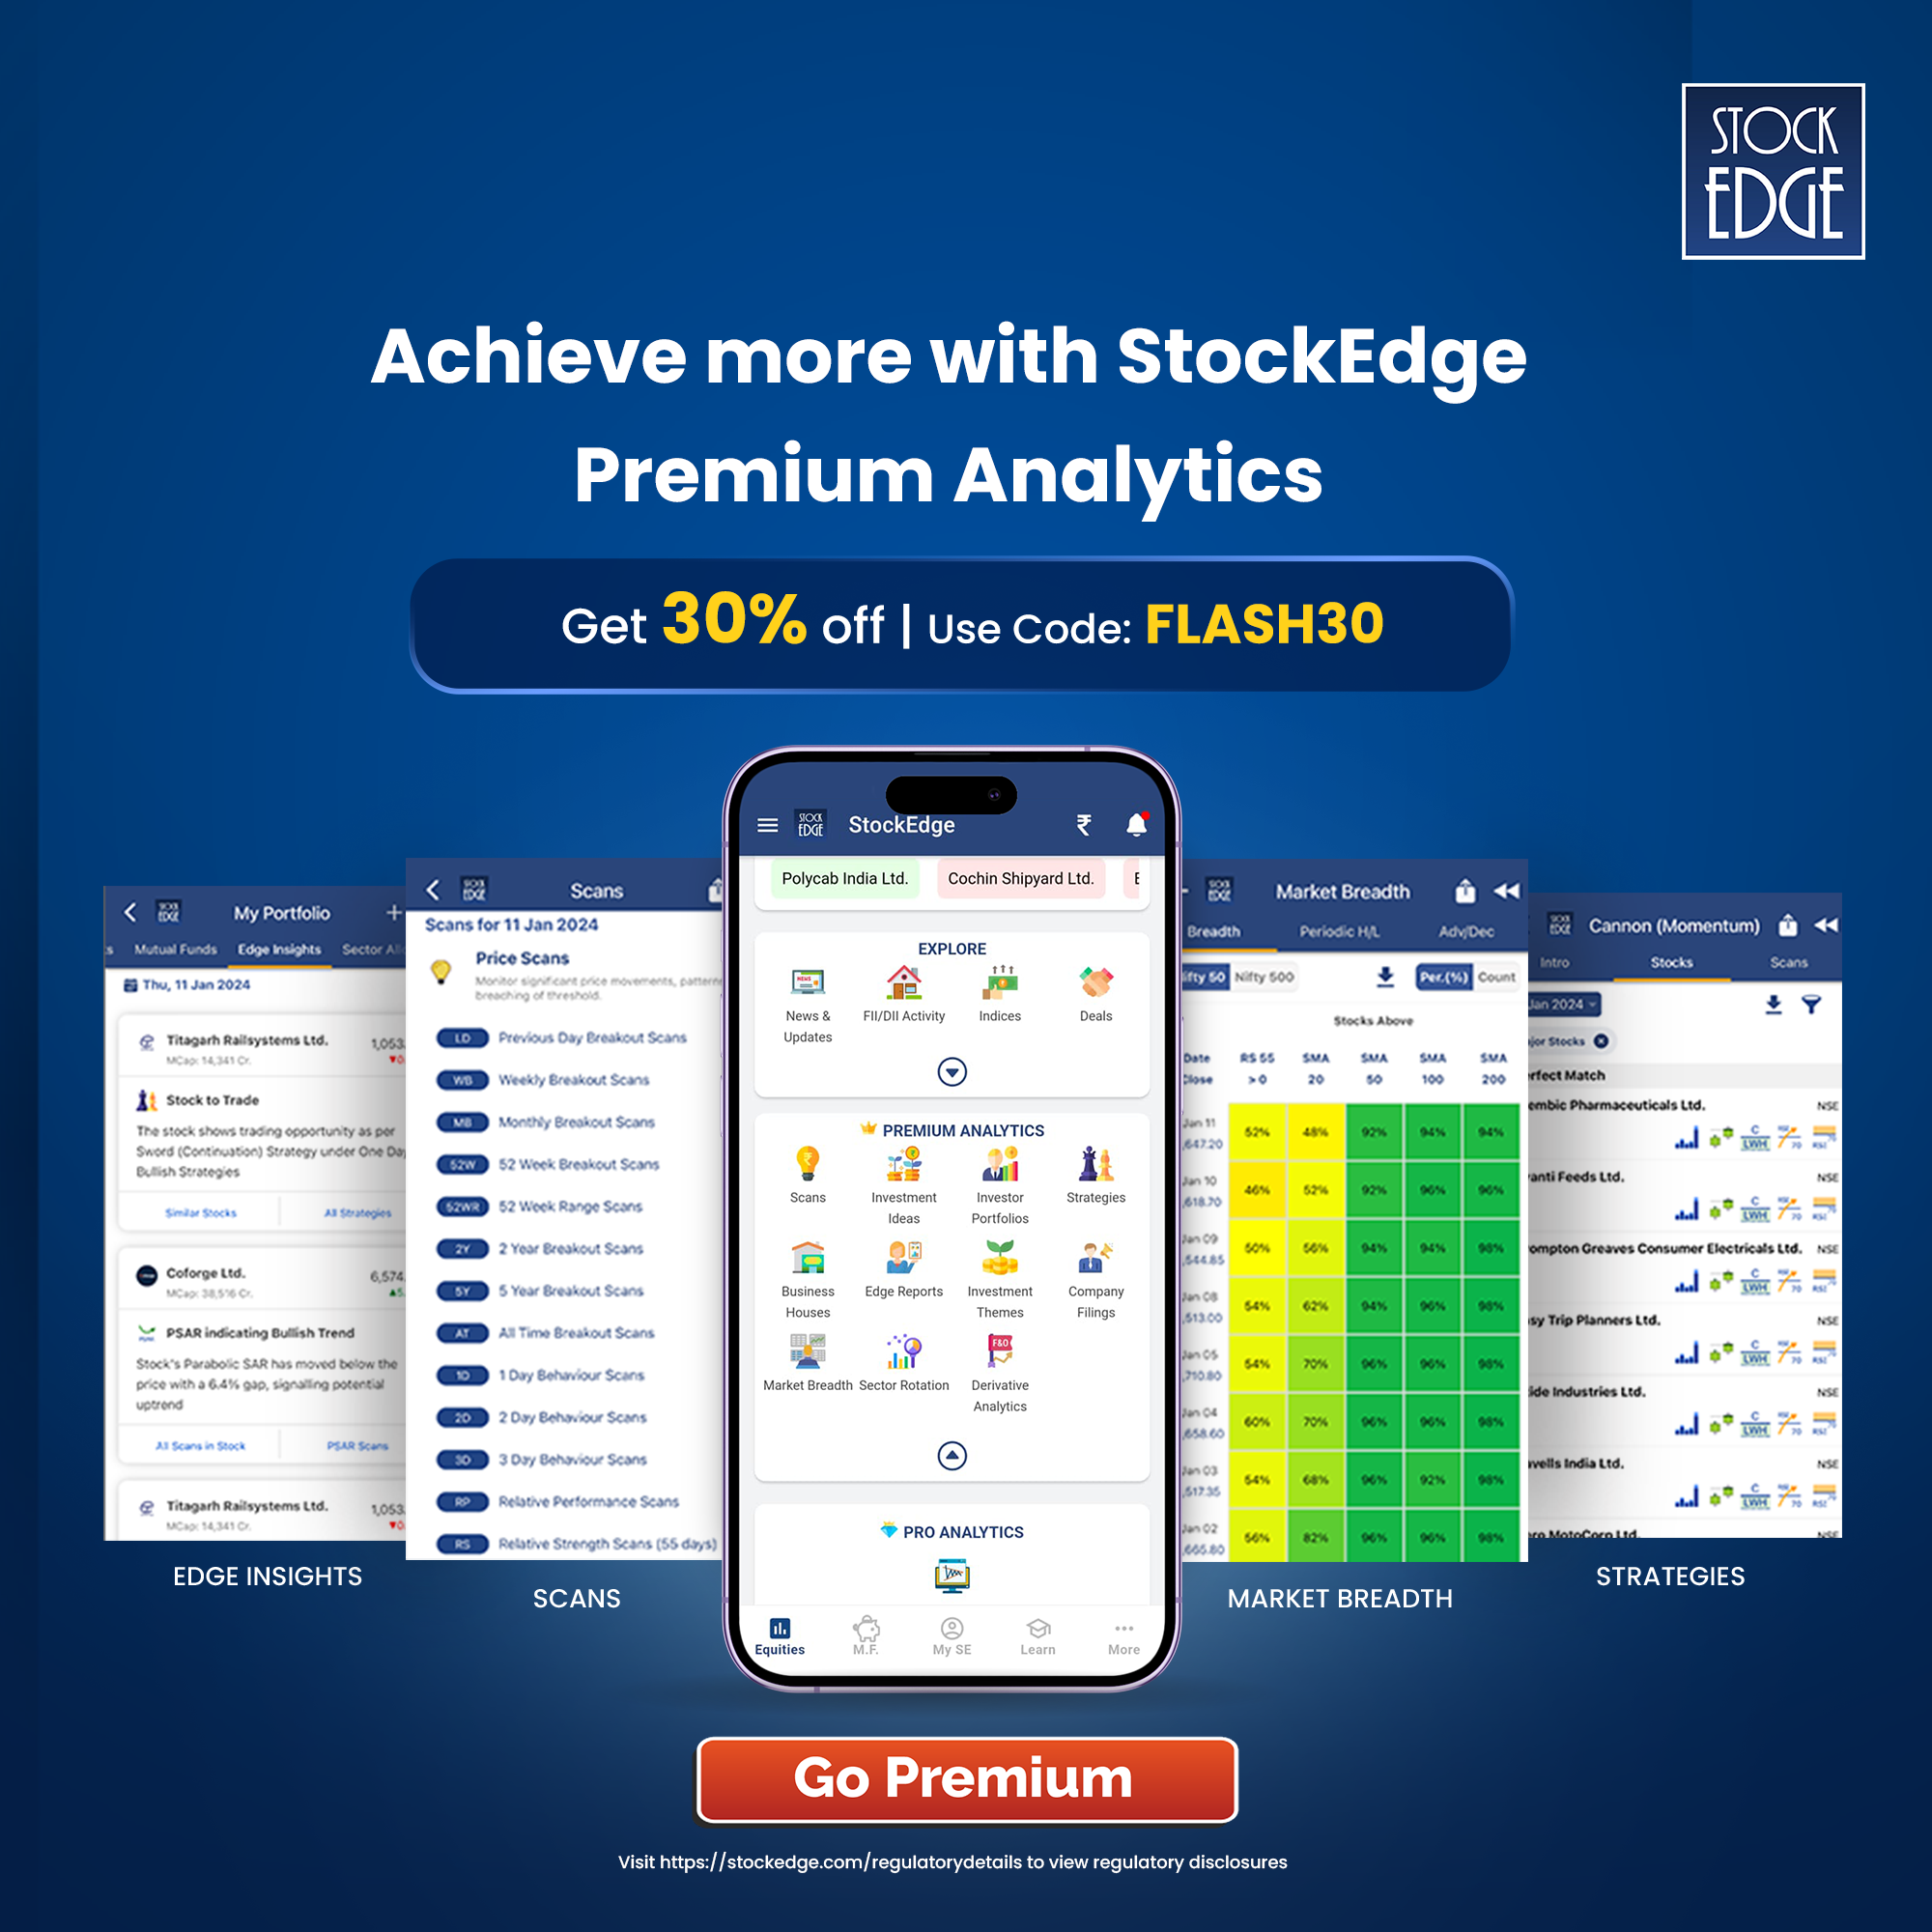 Get 30% off on StockEdge Premium